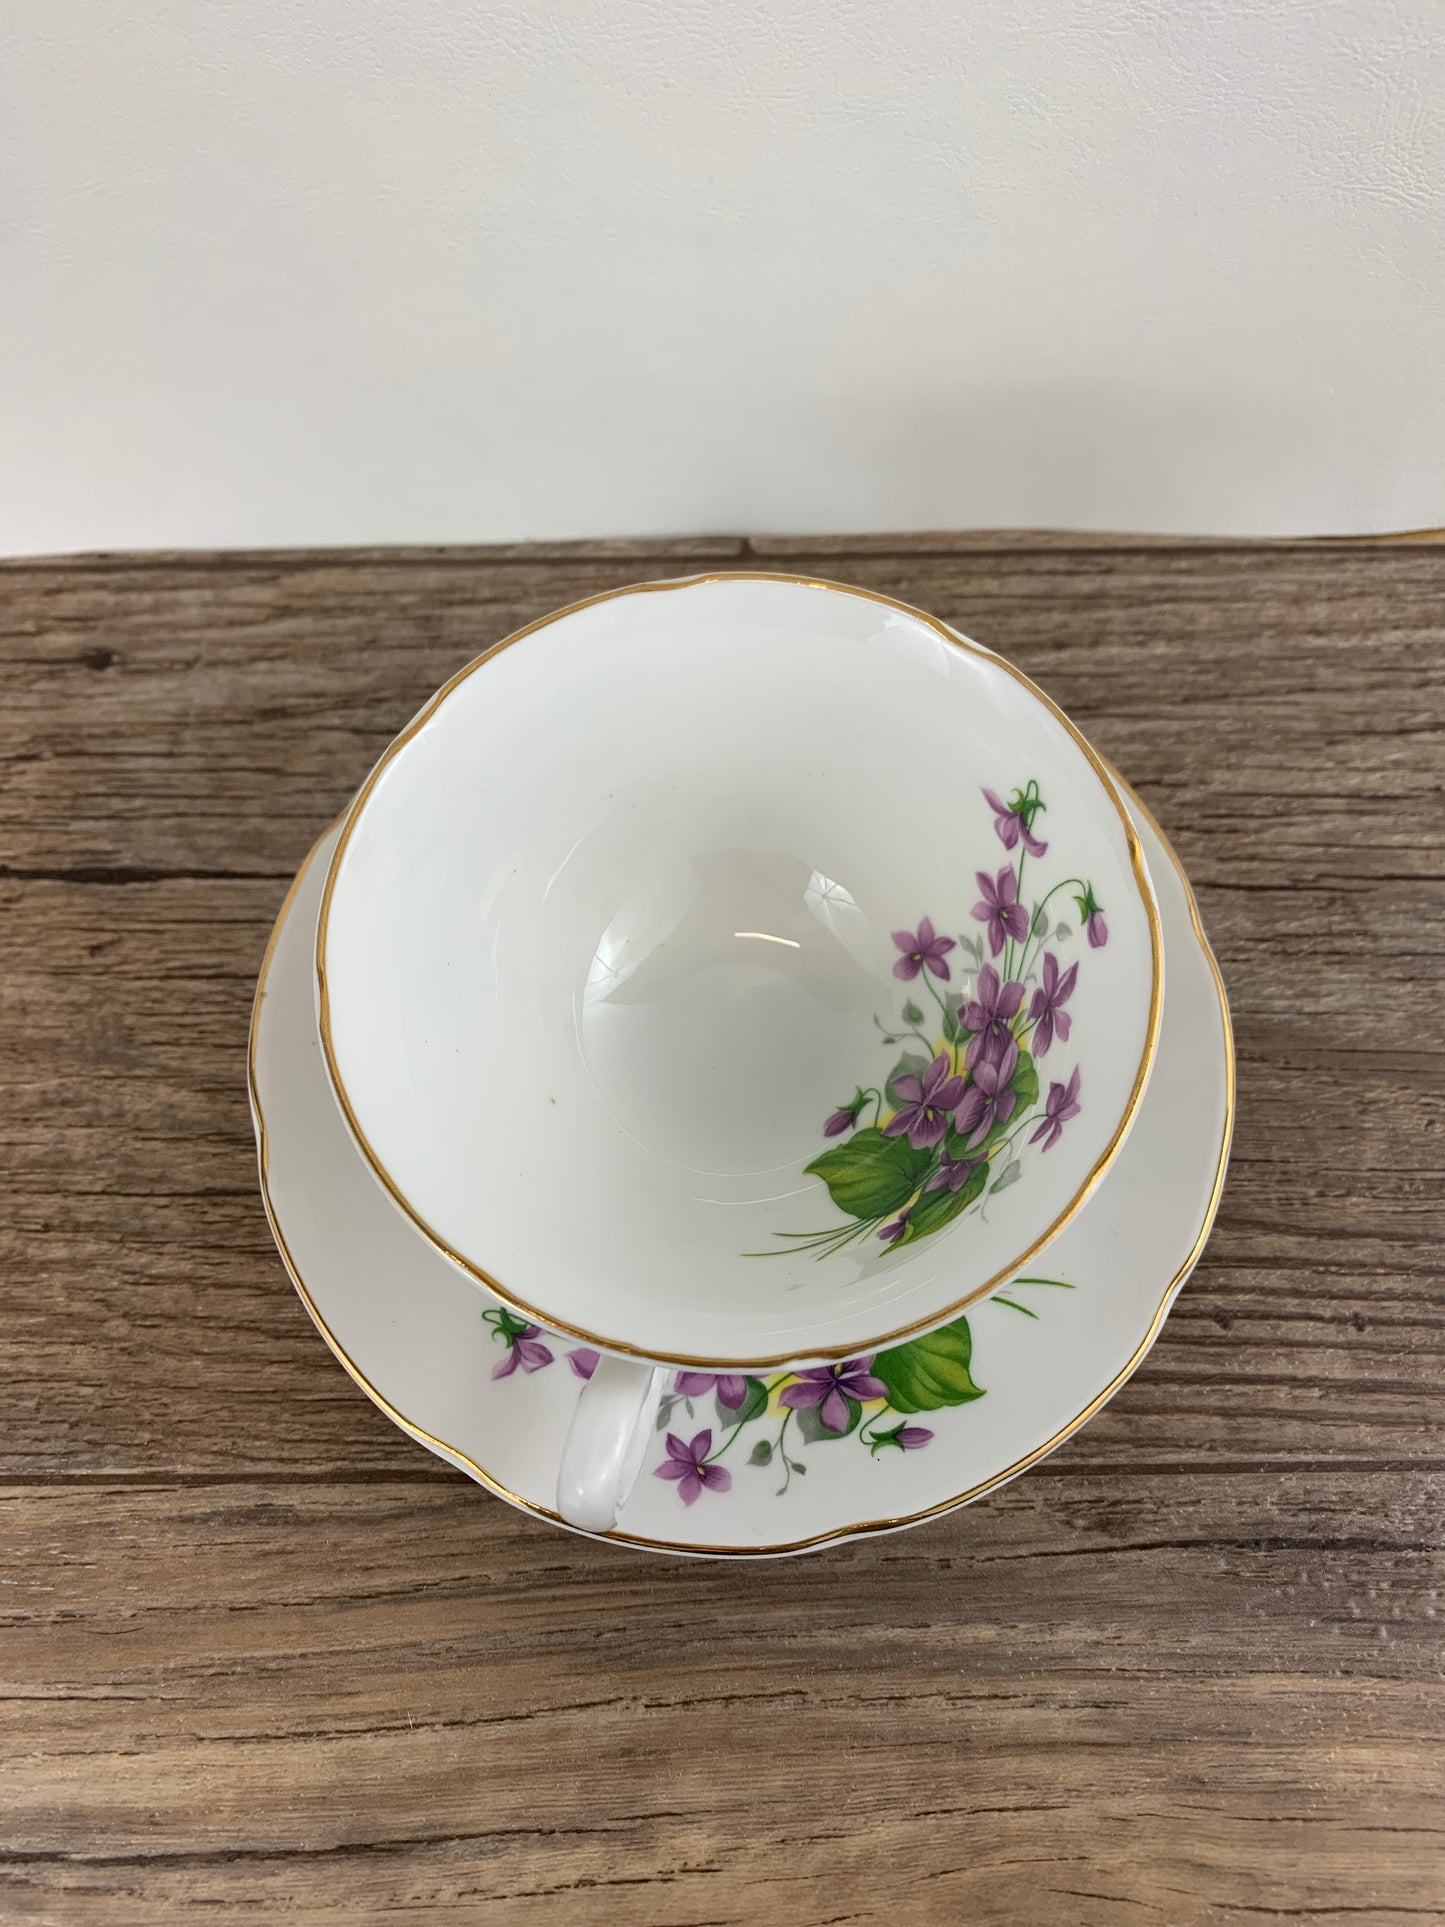 Vintage Tea Cup with Purple Violets, Royal Grafton Teacup